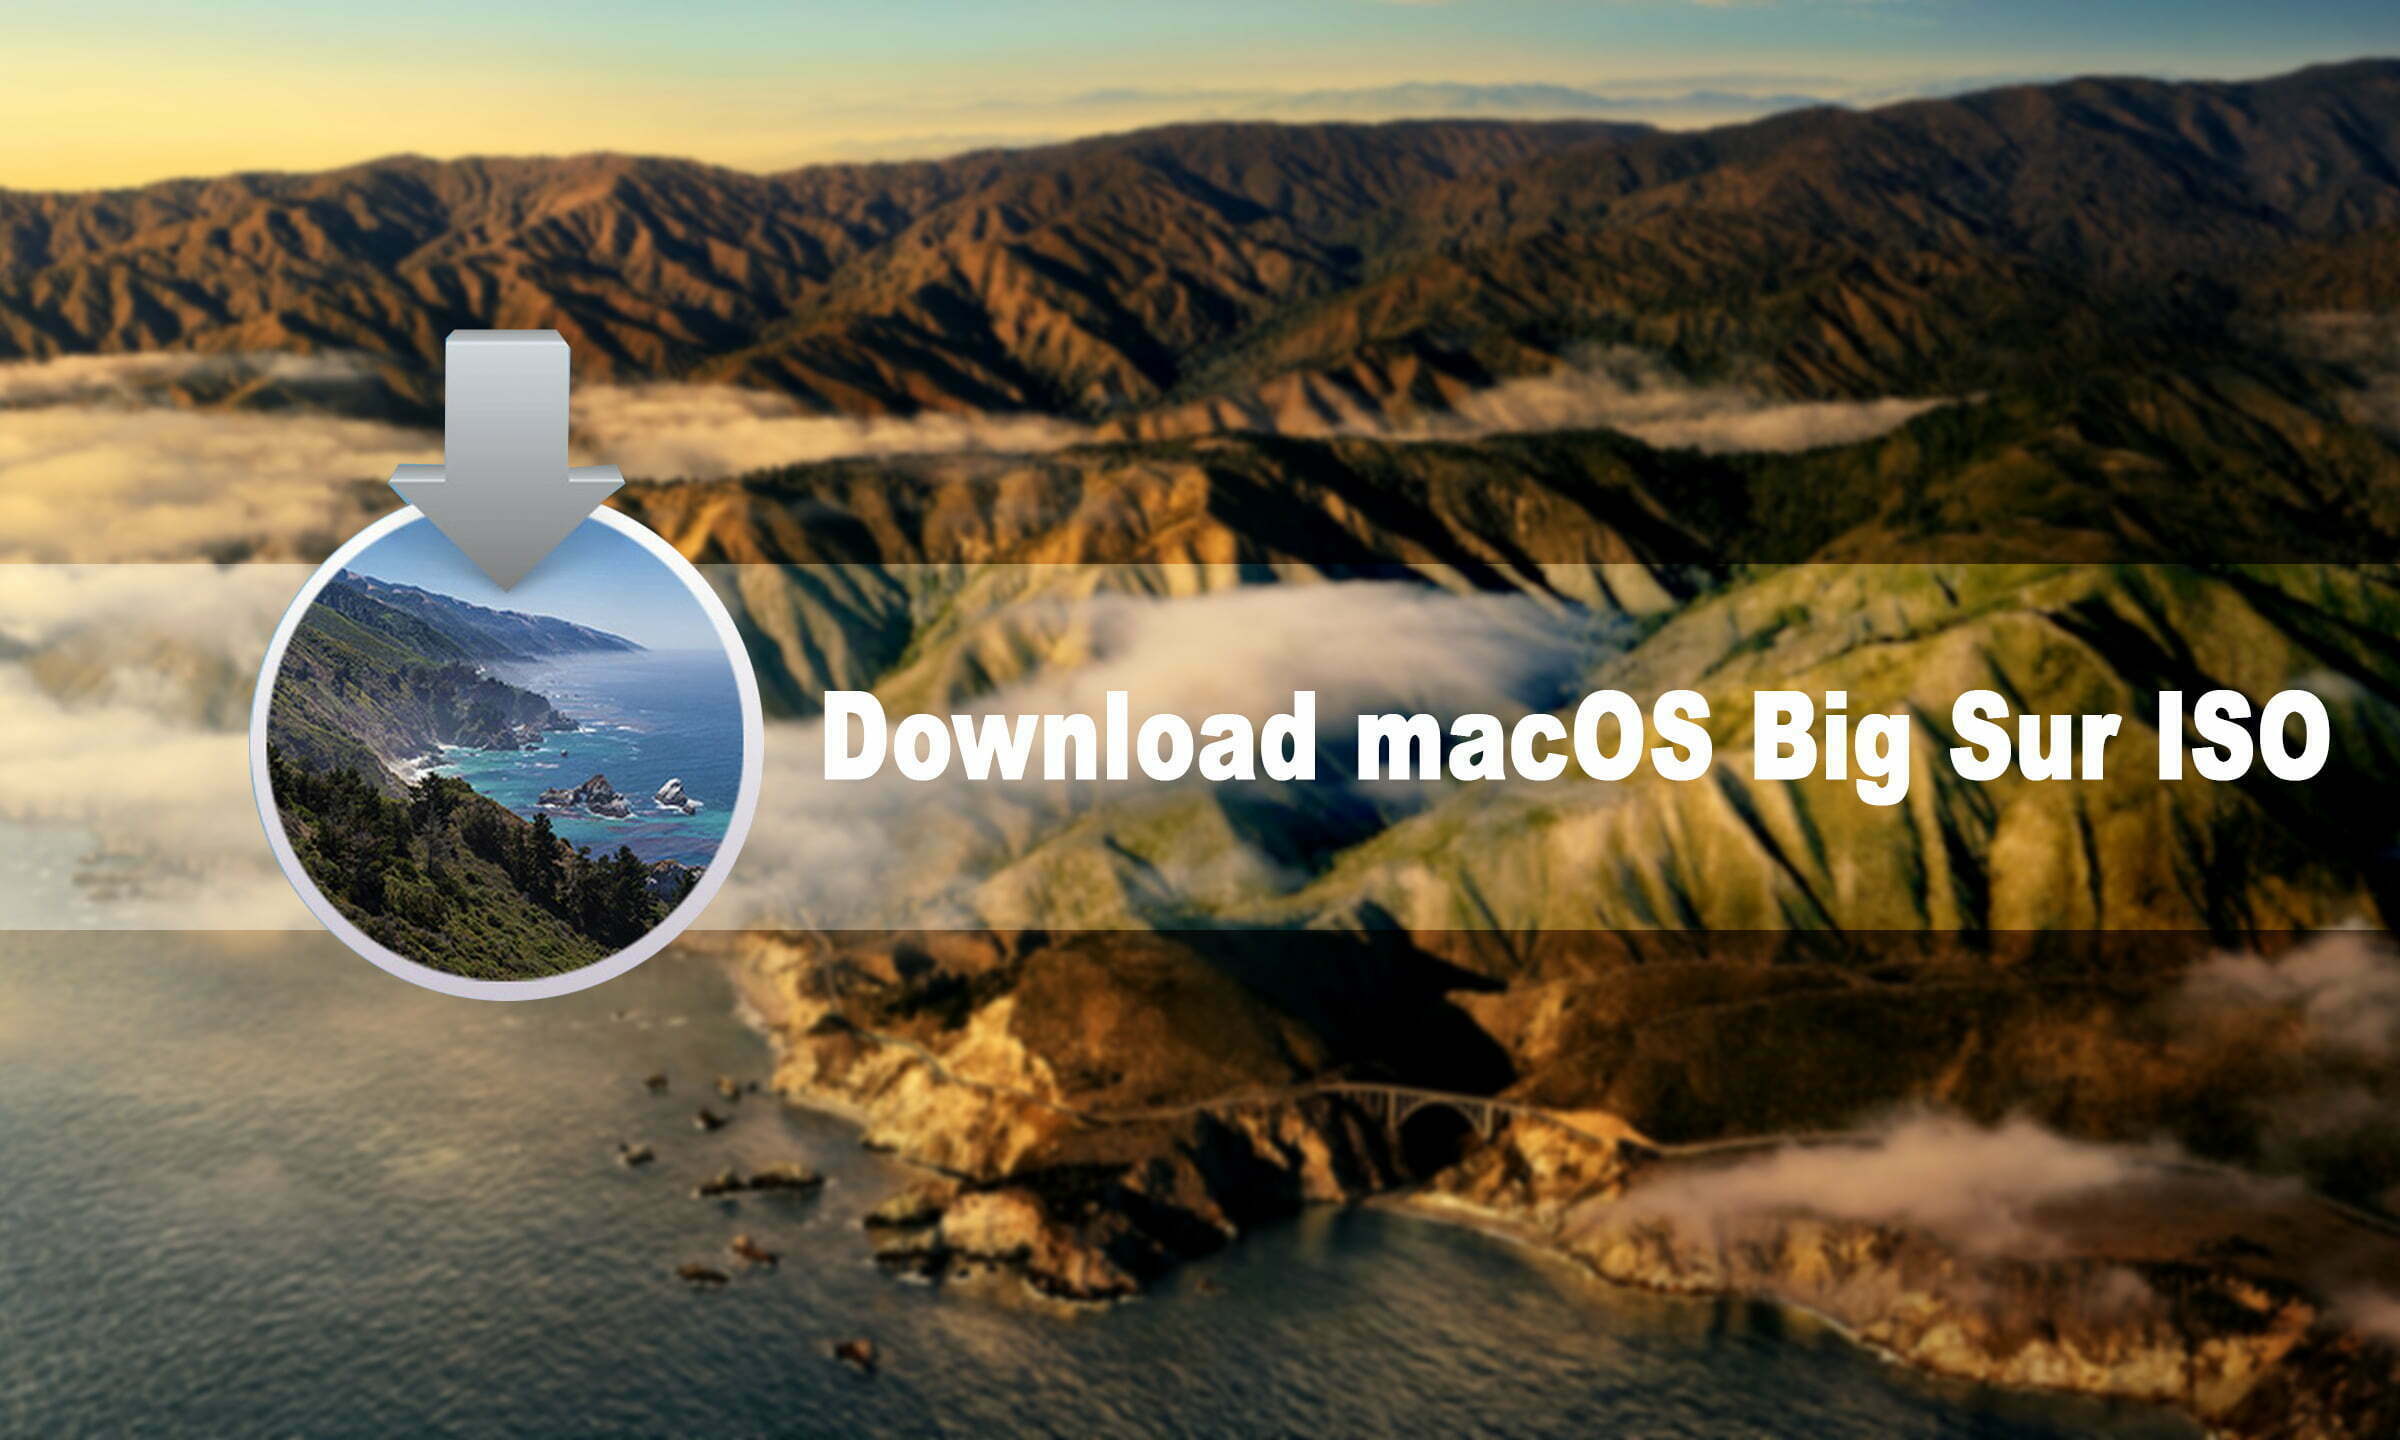 Download macOS Big Sur ISO (Virtual Machine Image)